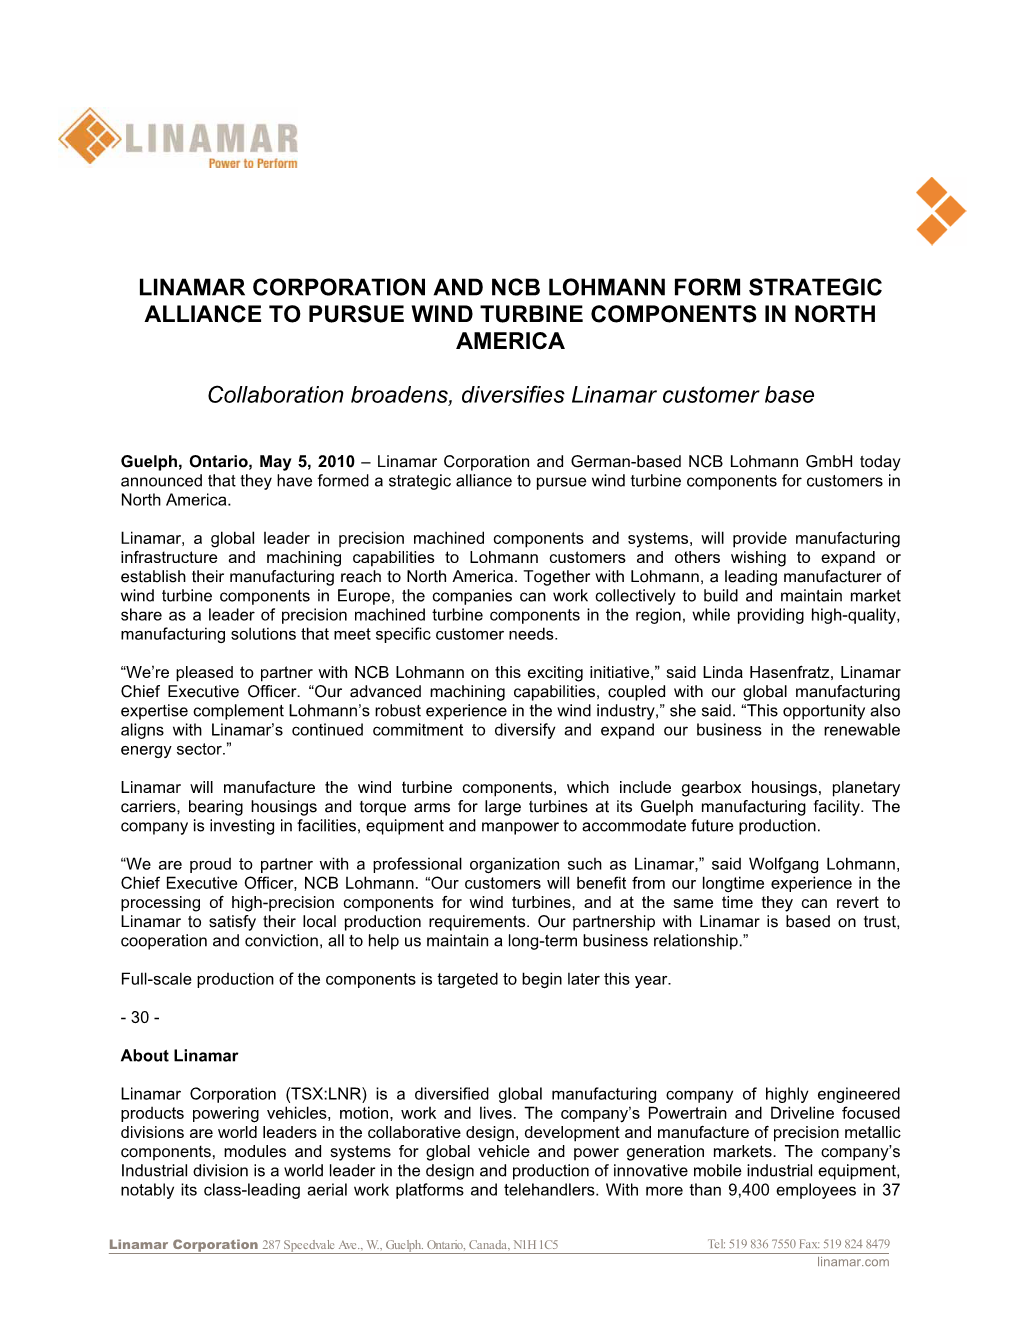 Linamar Corporation and Ncb Lohmann Form Strategic Alliance to Pursue Wind Turbine Components in North America